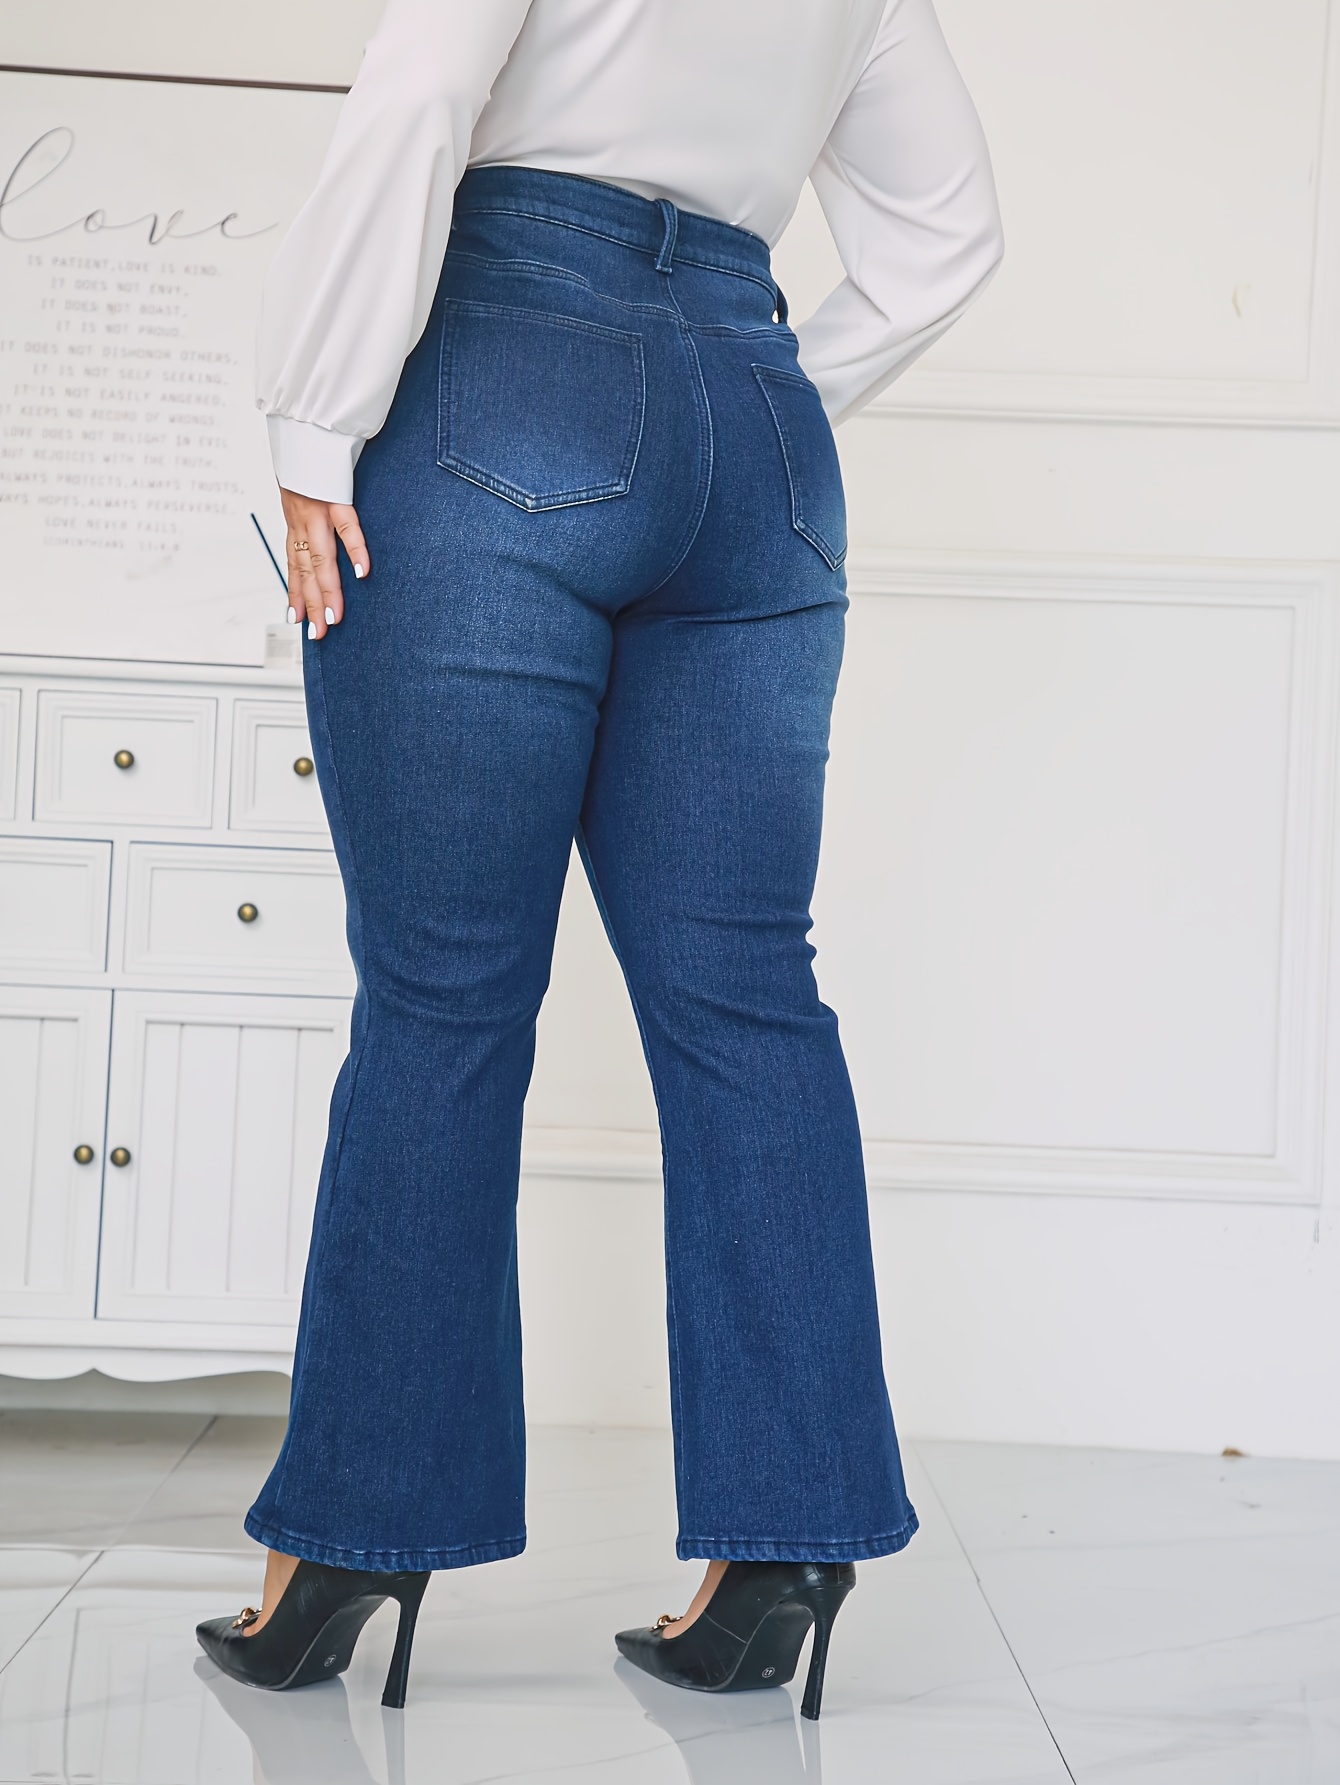 Medium Blue Bootcut High Waisted Denim Pants Stretchy Fleece-Lined